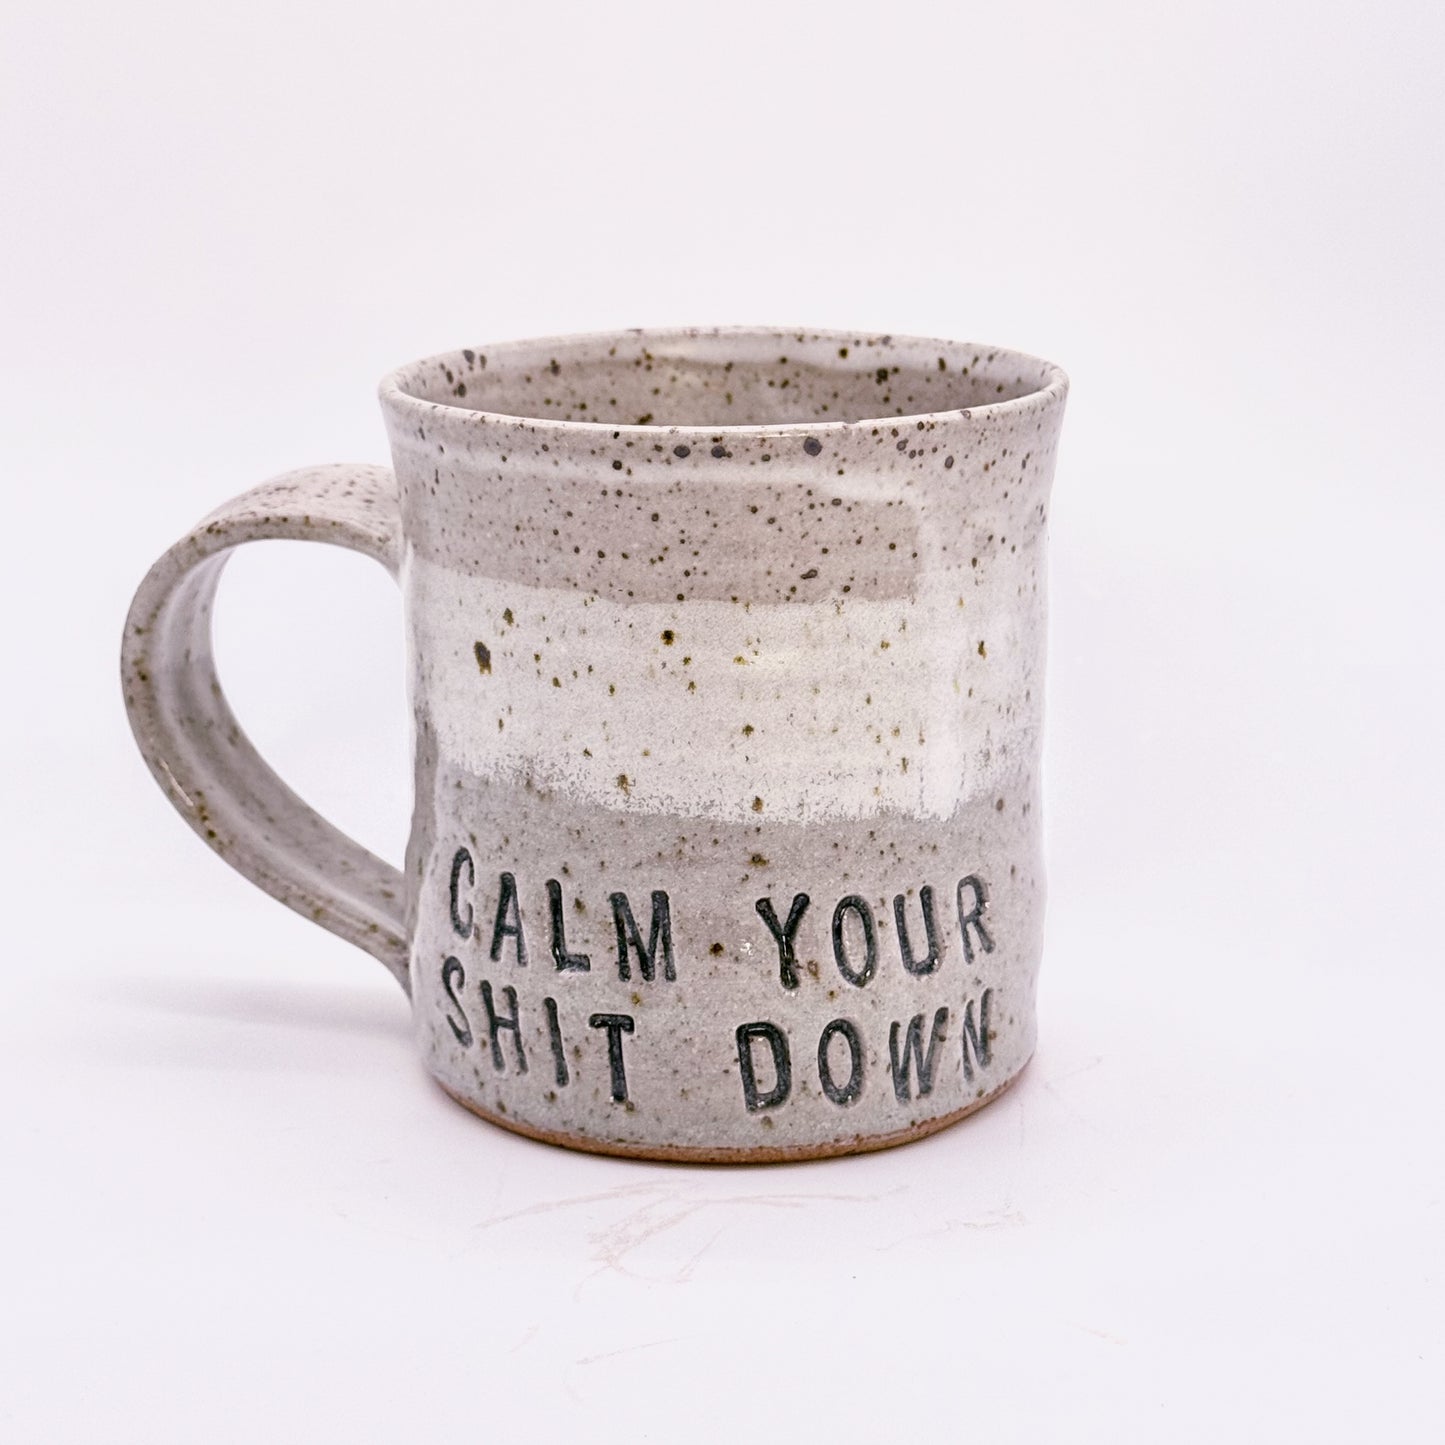 "Calm Your Shit Down" Coffee Mugs